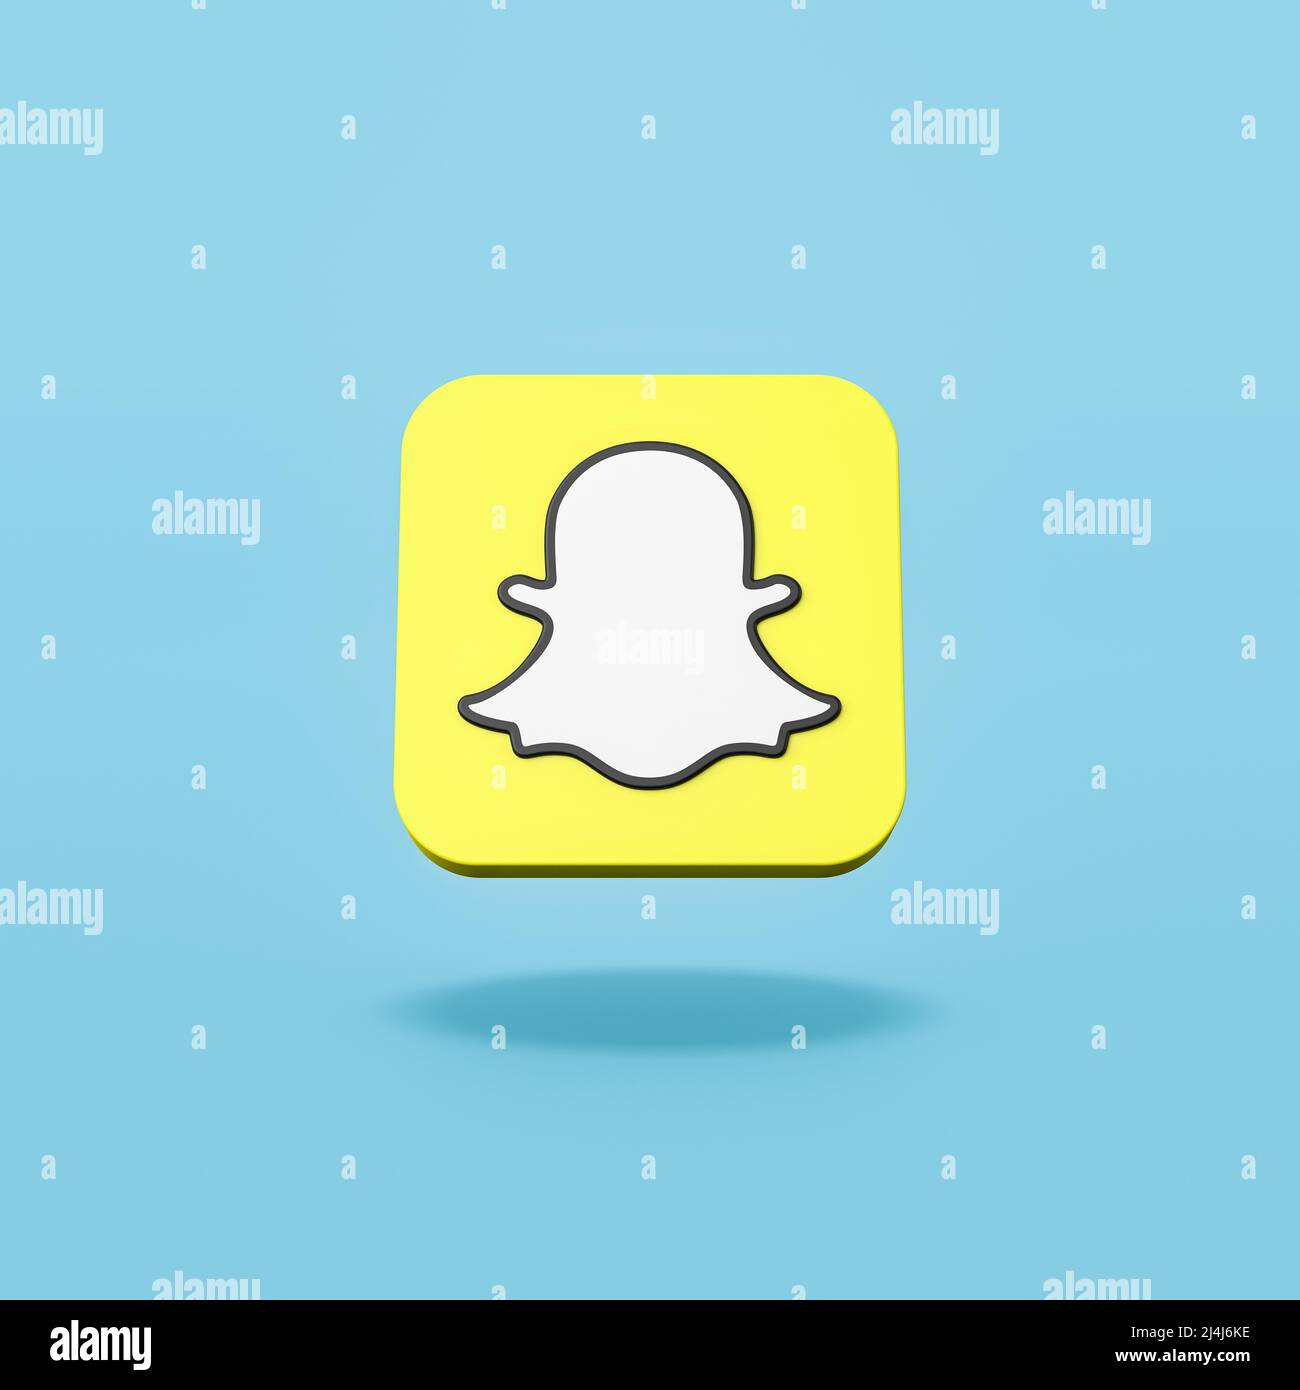 Snapchat Logo on Flat Blue Background Stock Photo